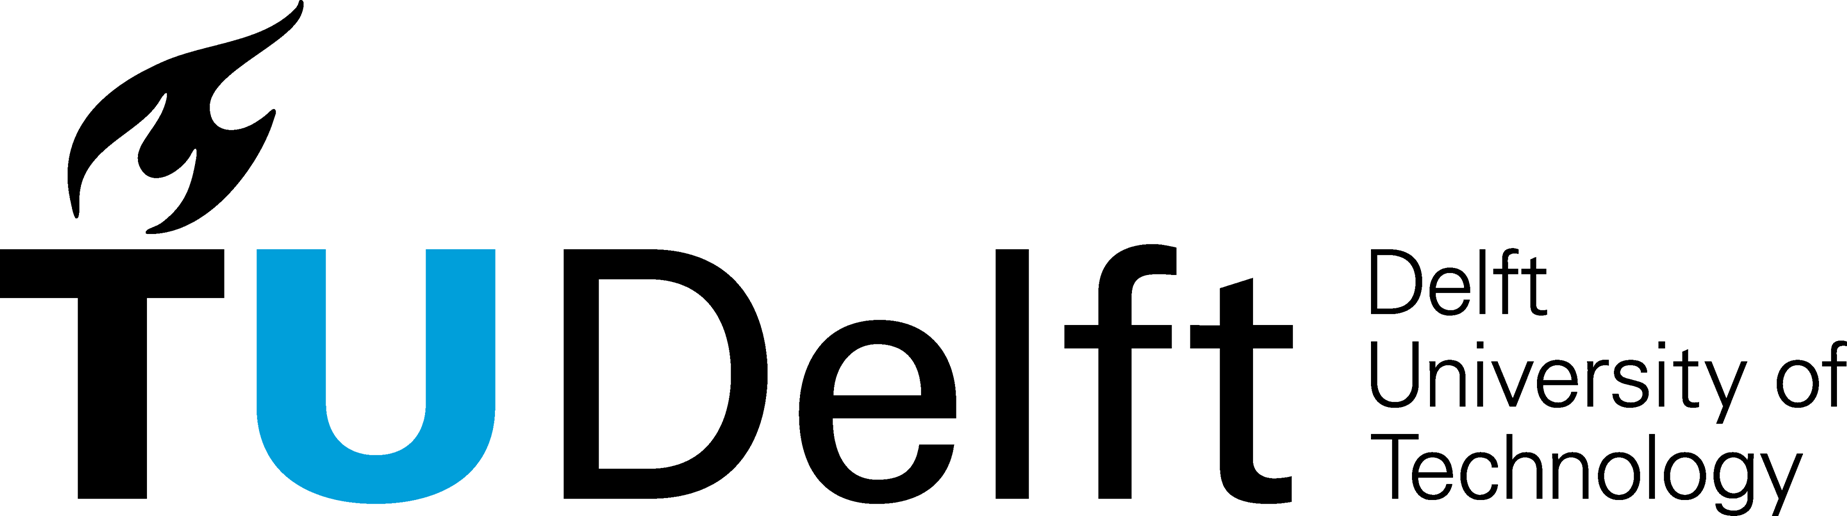 TU_Delft_logo